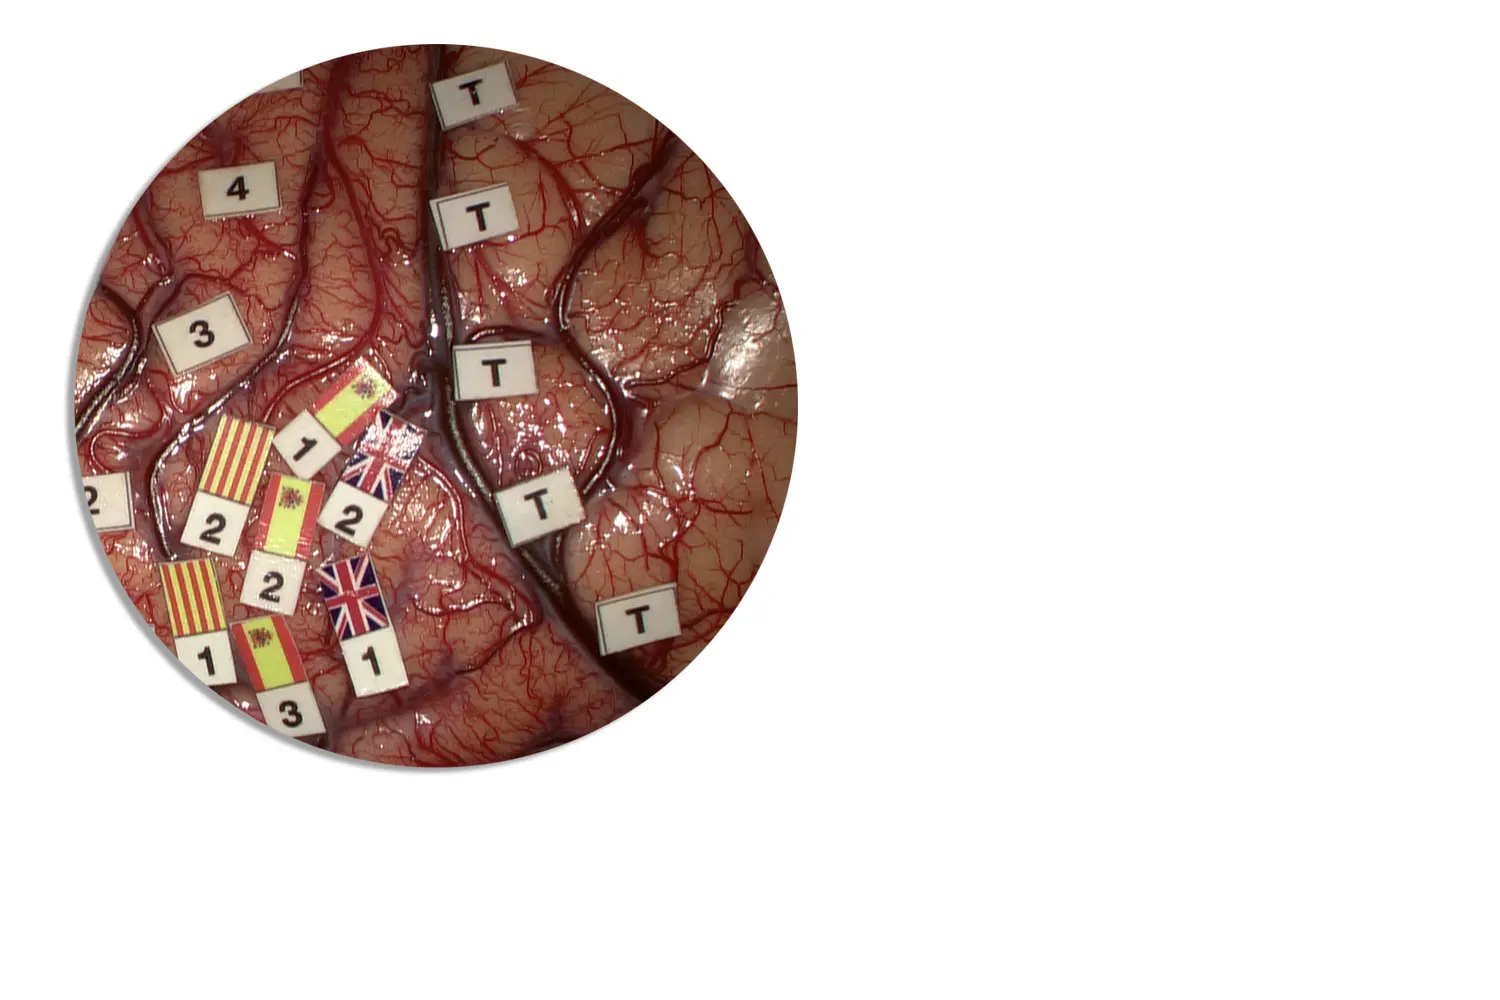 Doctor de Quintana brain surgery brain mapping